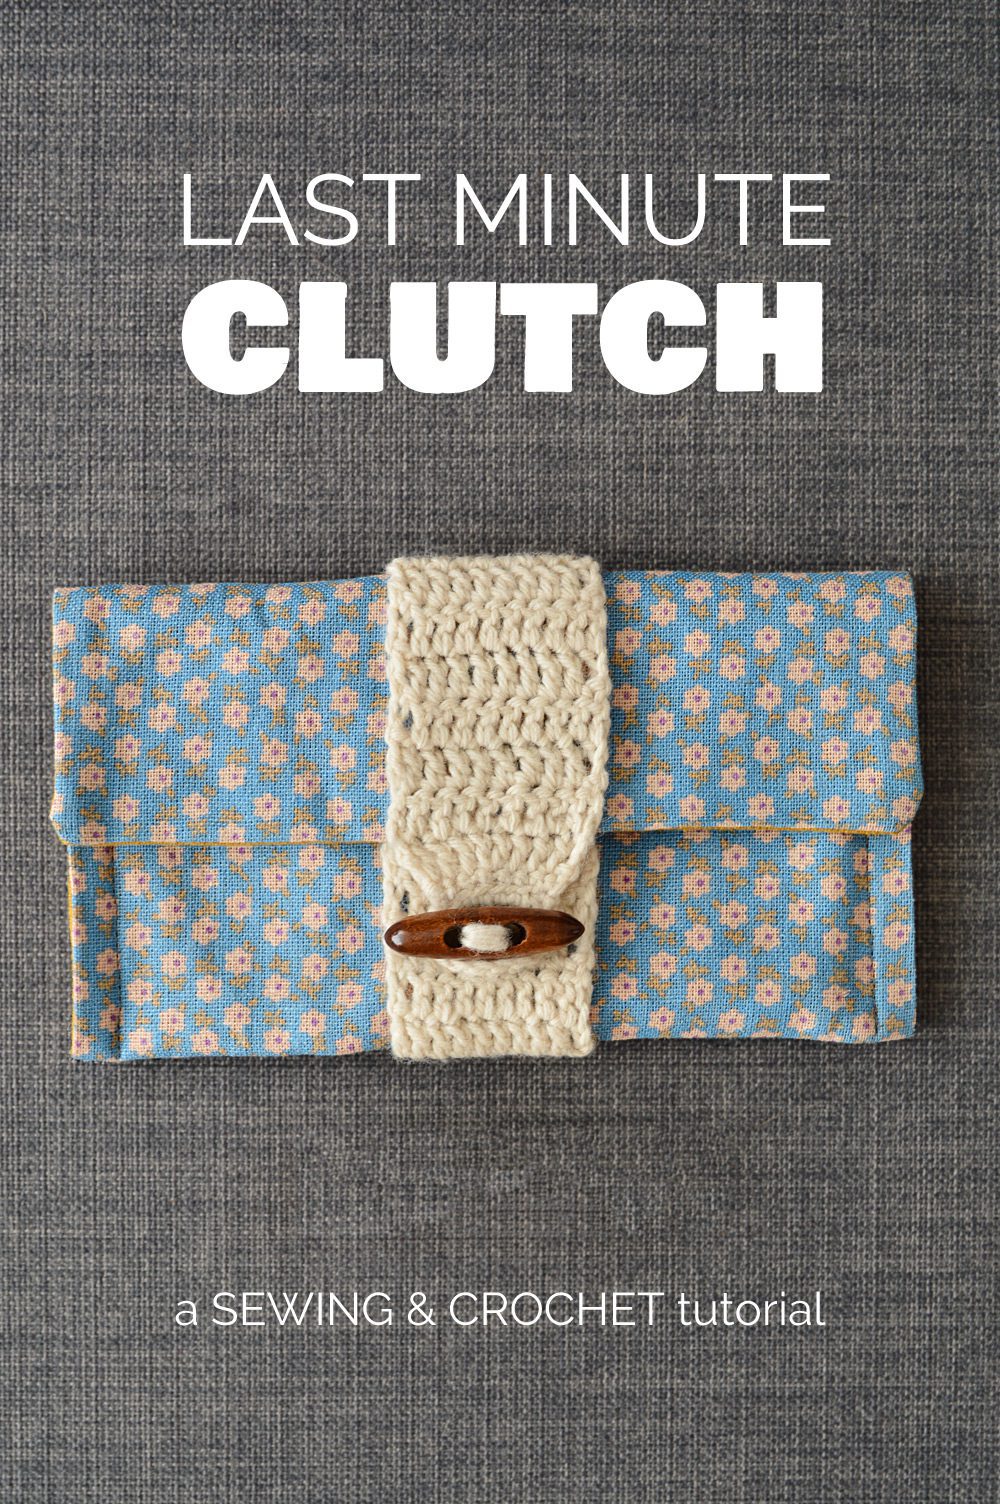 DIY last minute clutch tutorial #sewing #crochet @craftingfingers